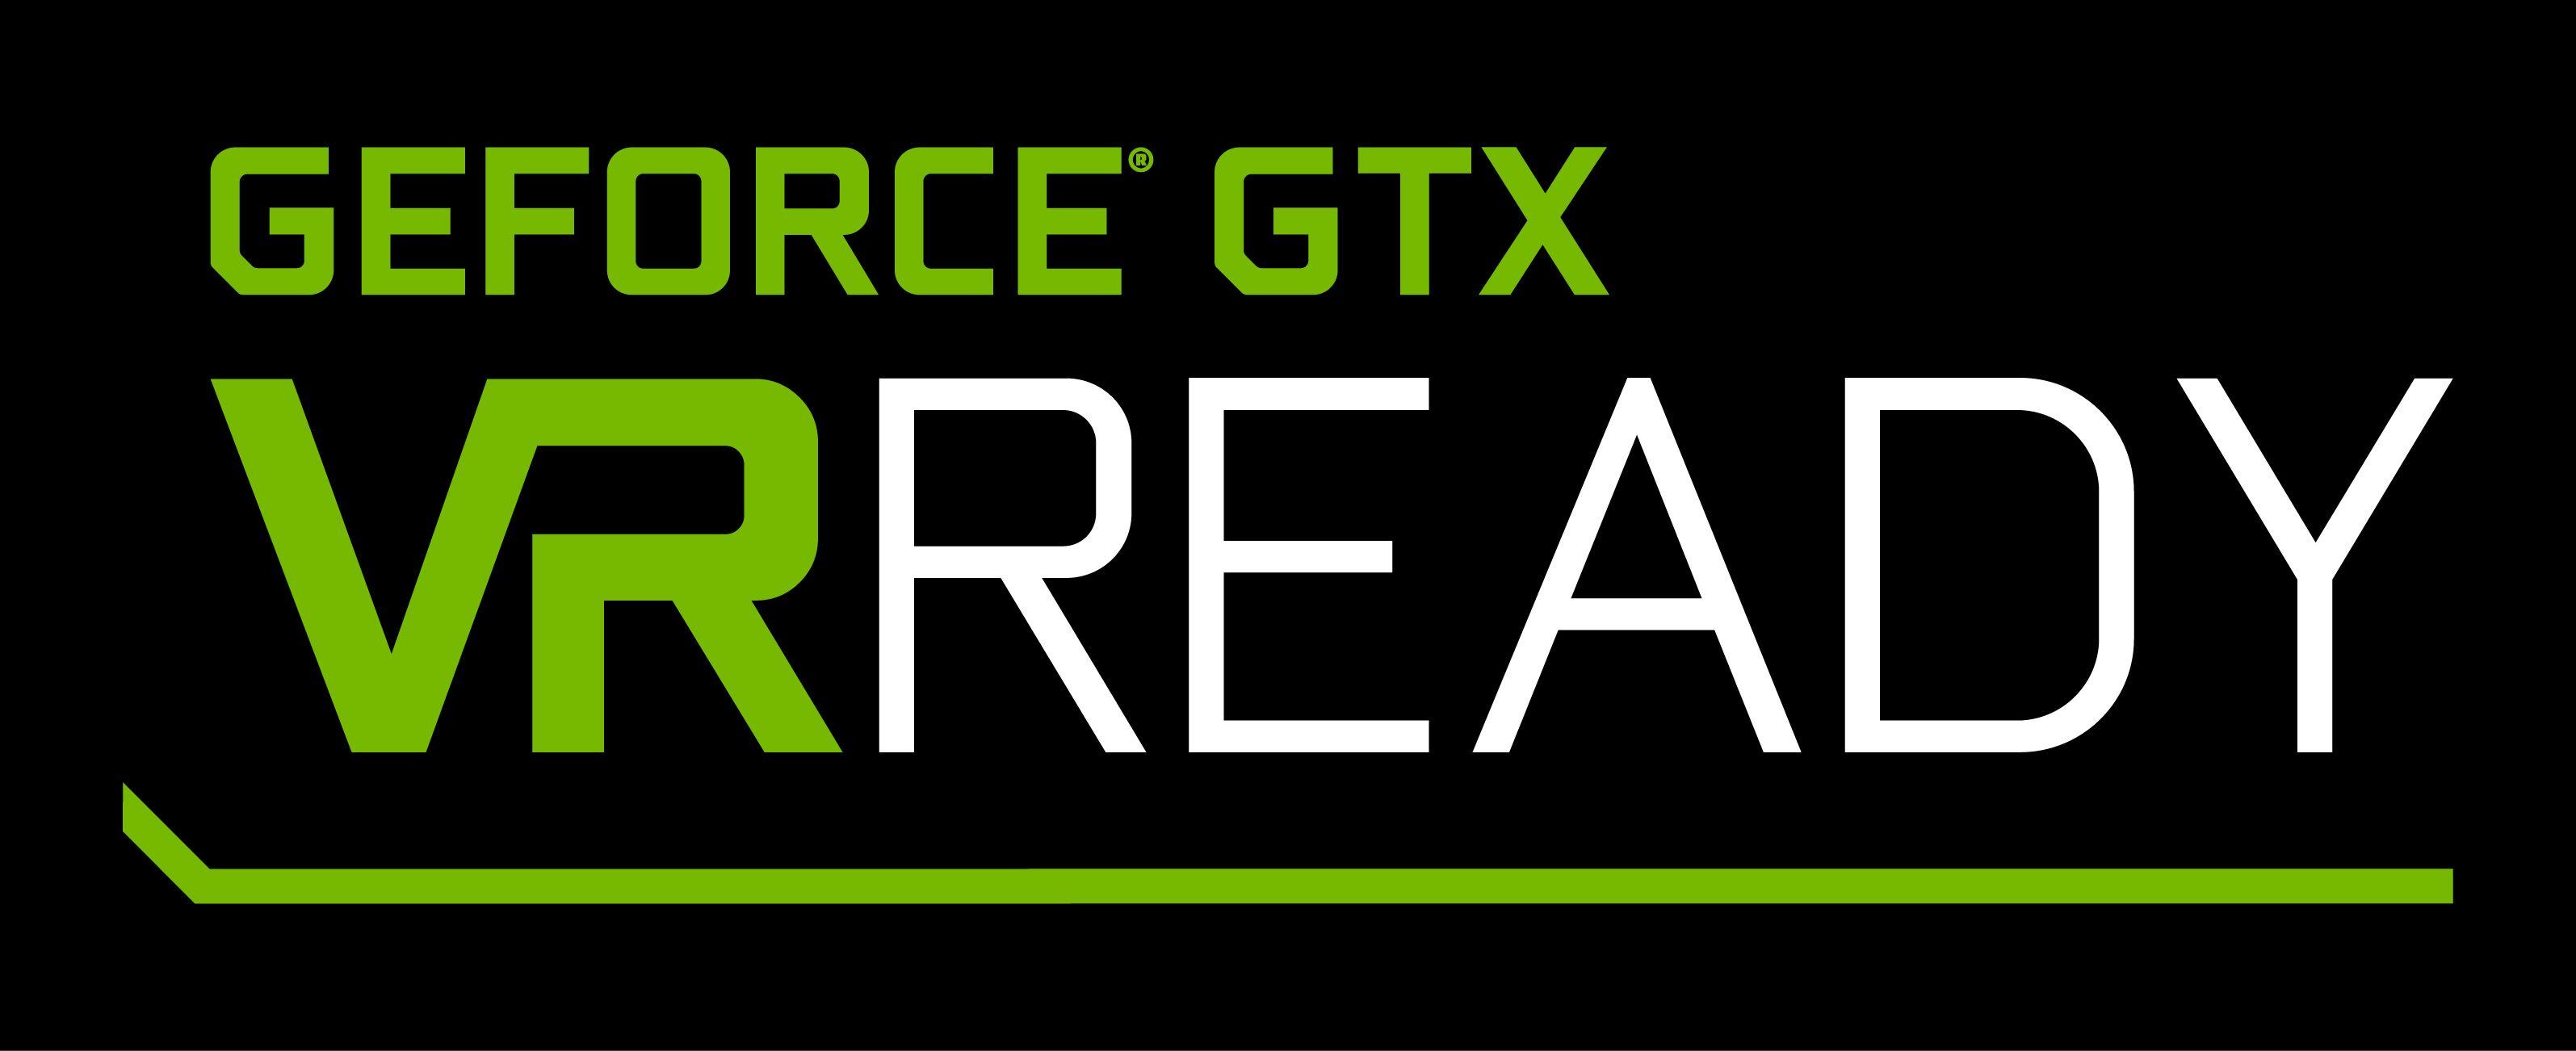 NVIDIA GeForce GTX Logo - NVIDIA Launches 'GTX Geforce VR Ready' PC Program